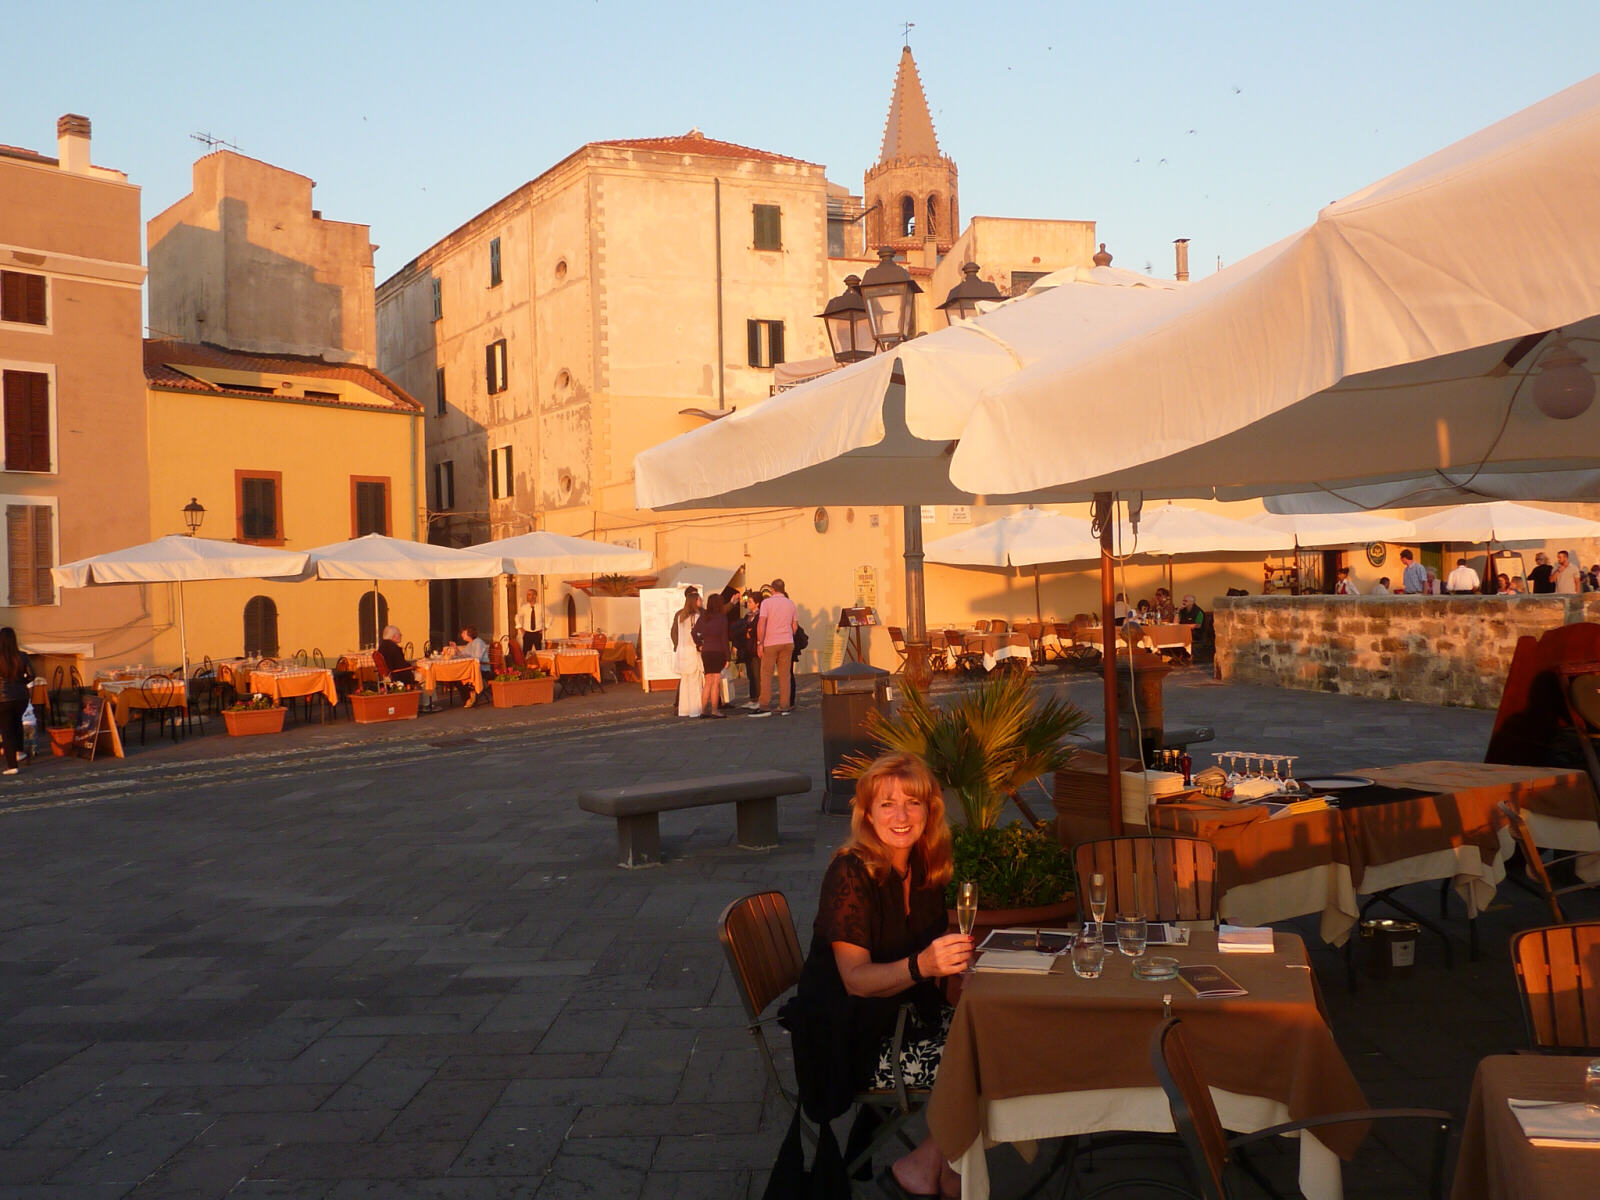 Dinner at a restaurant in the square, Alghero, Sardinia